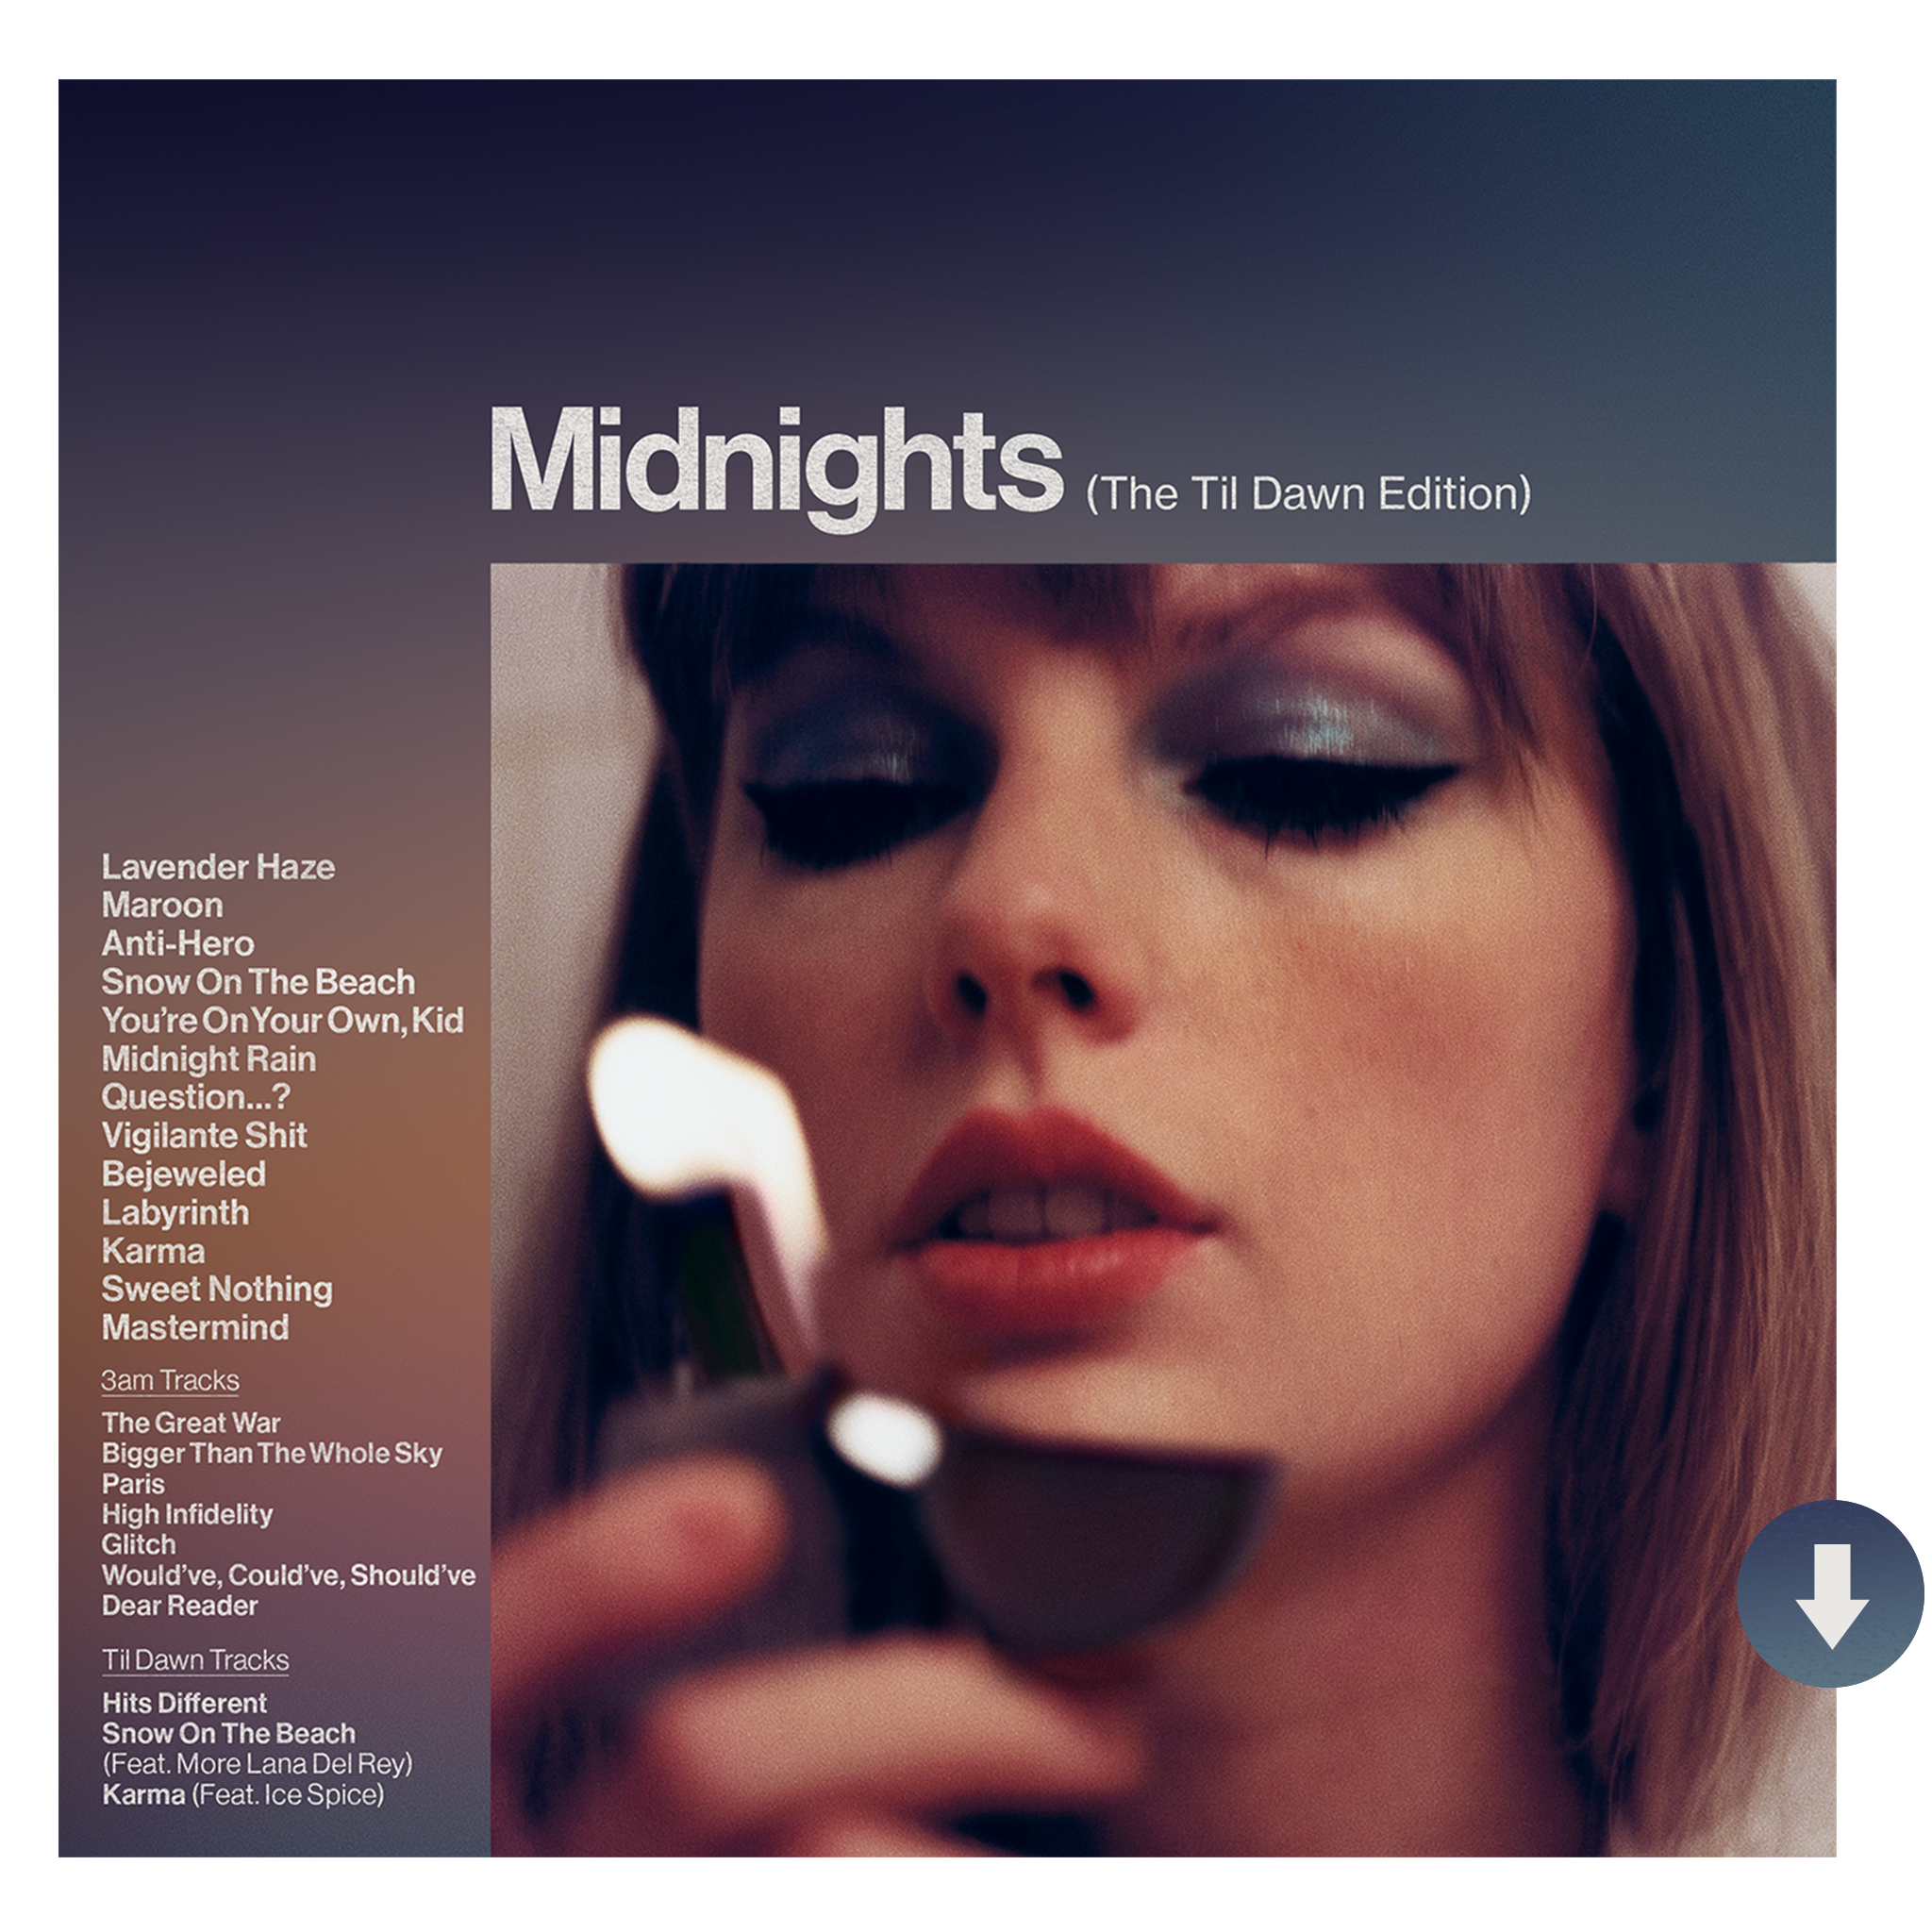 Midnights (The Til Dawn Edition) Digital Album